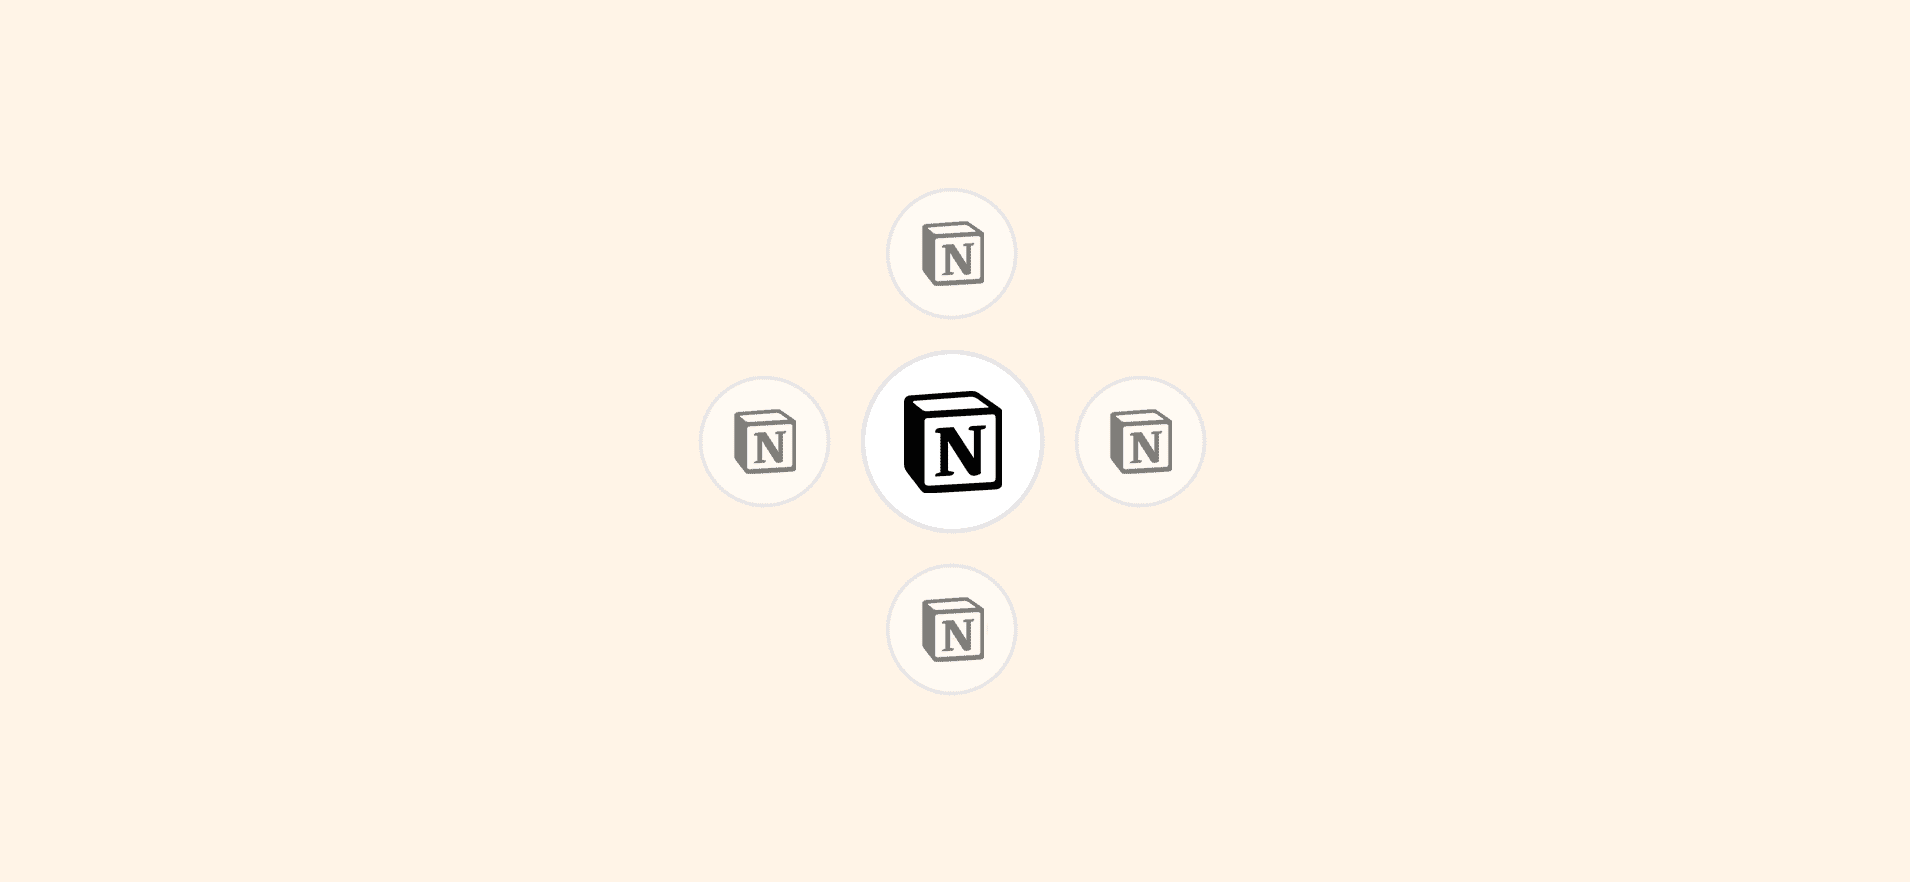 Logos for Notion, representing the Notion alternatives blog post.